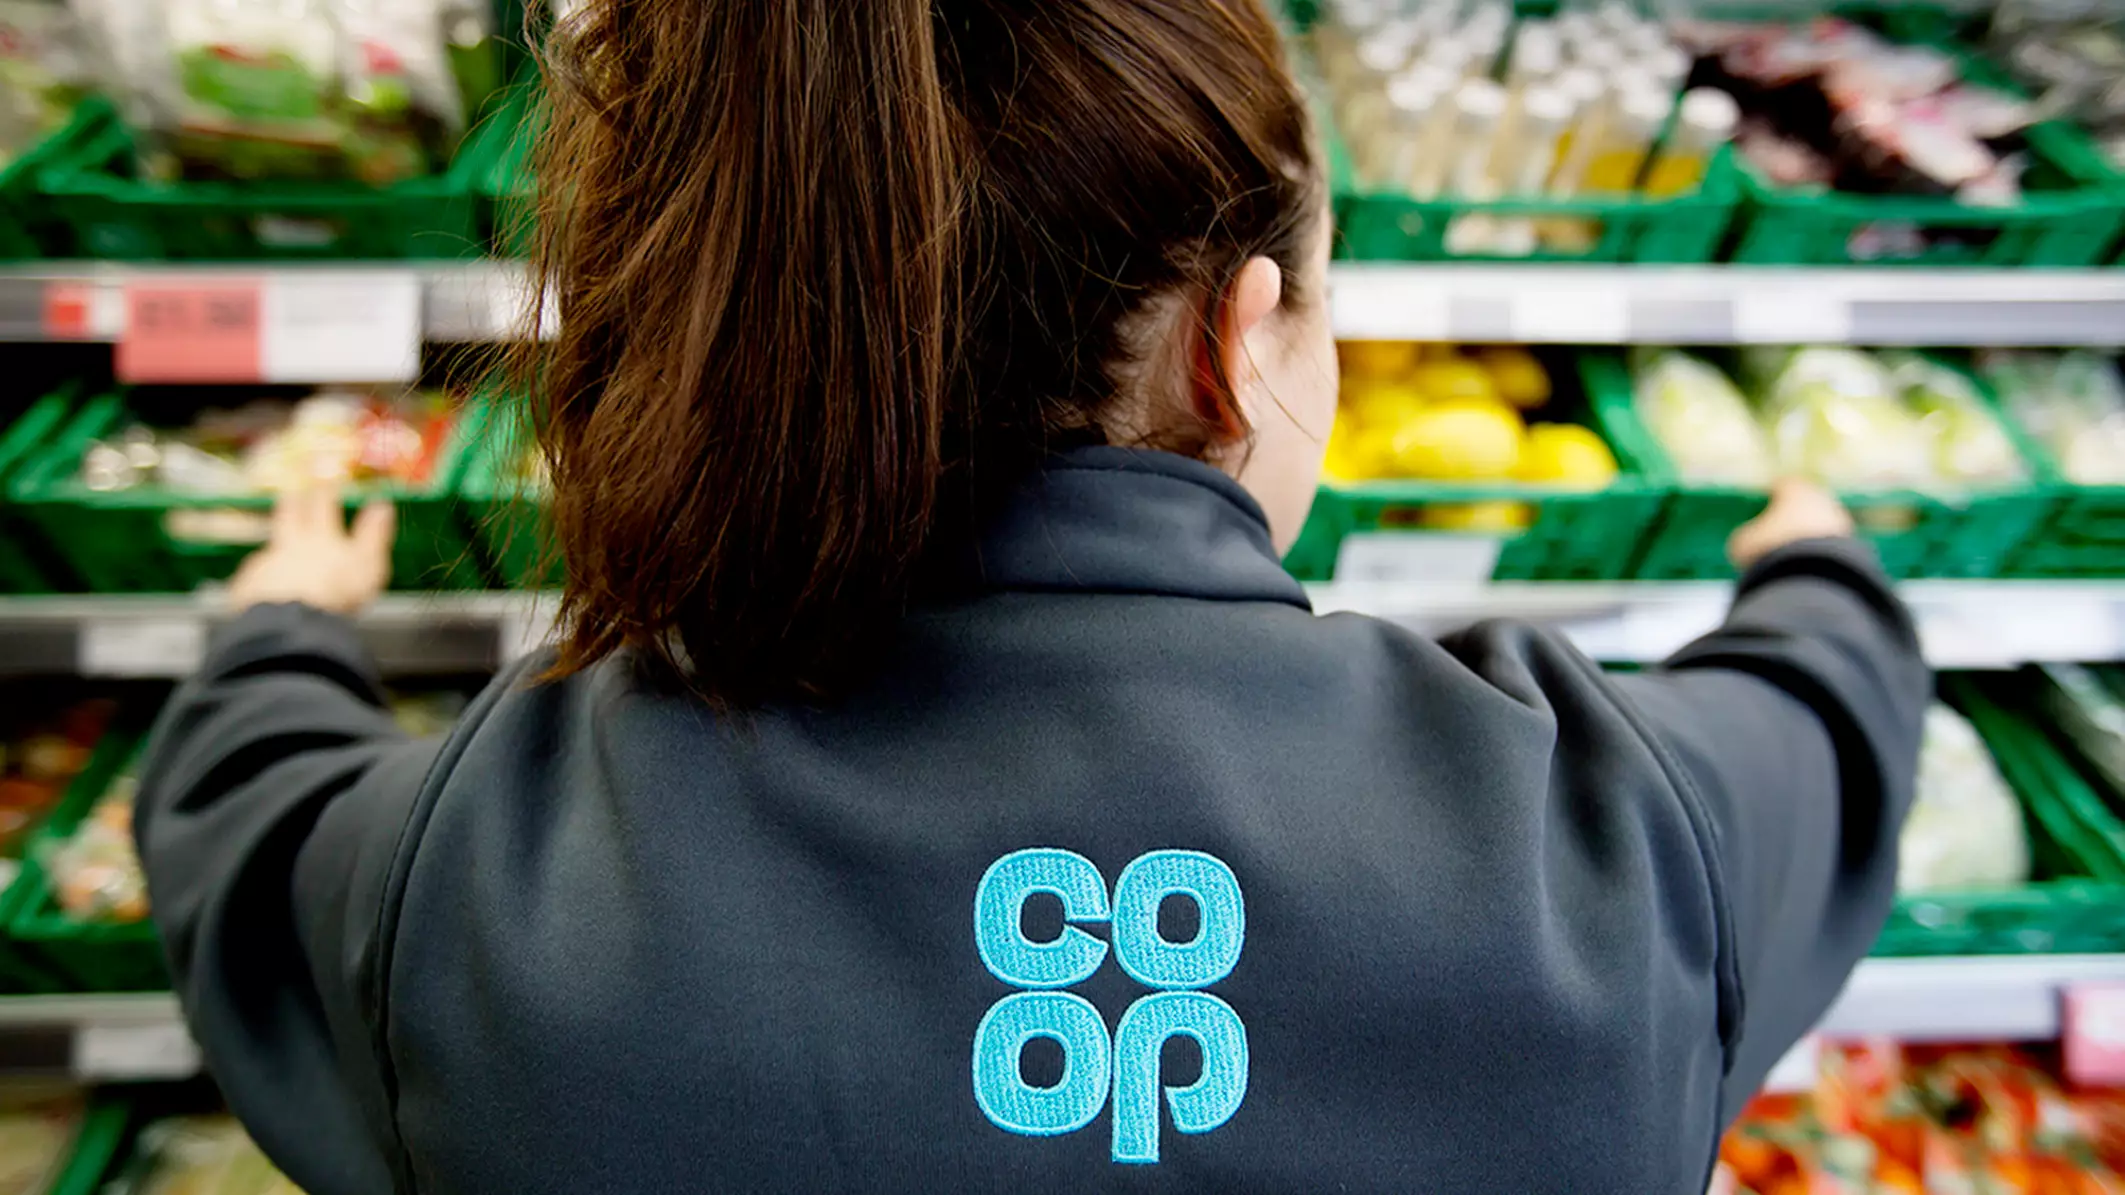 Co-Op Creates 5,000 Jobs For Those Made Redundant